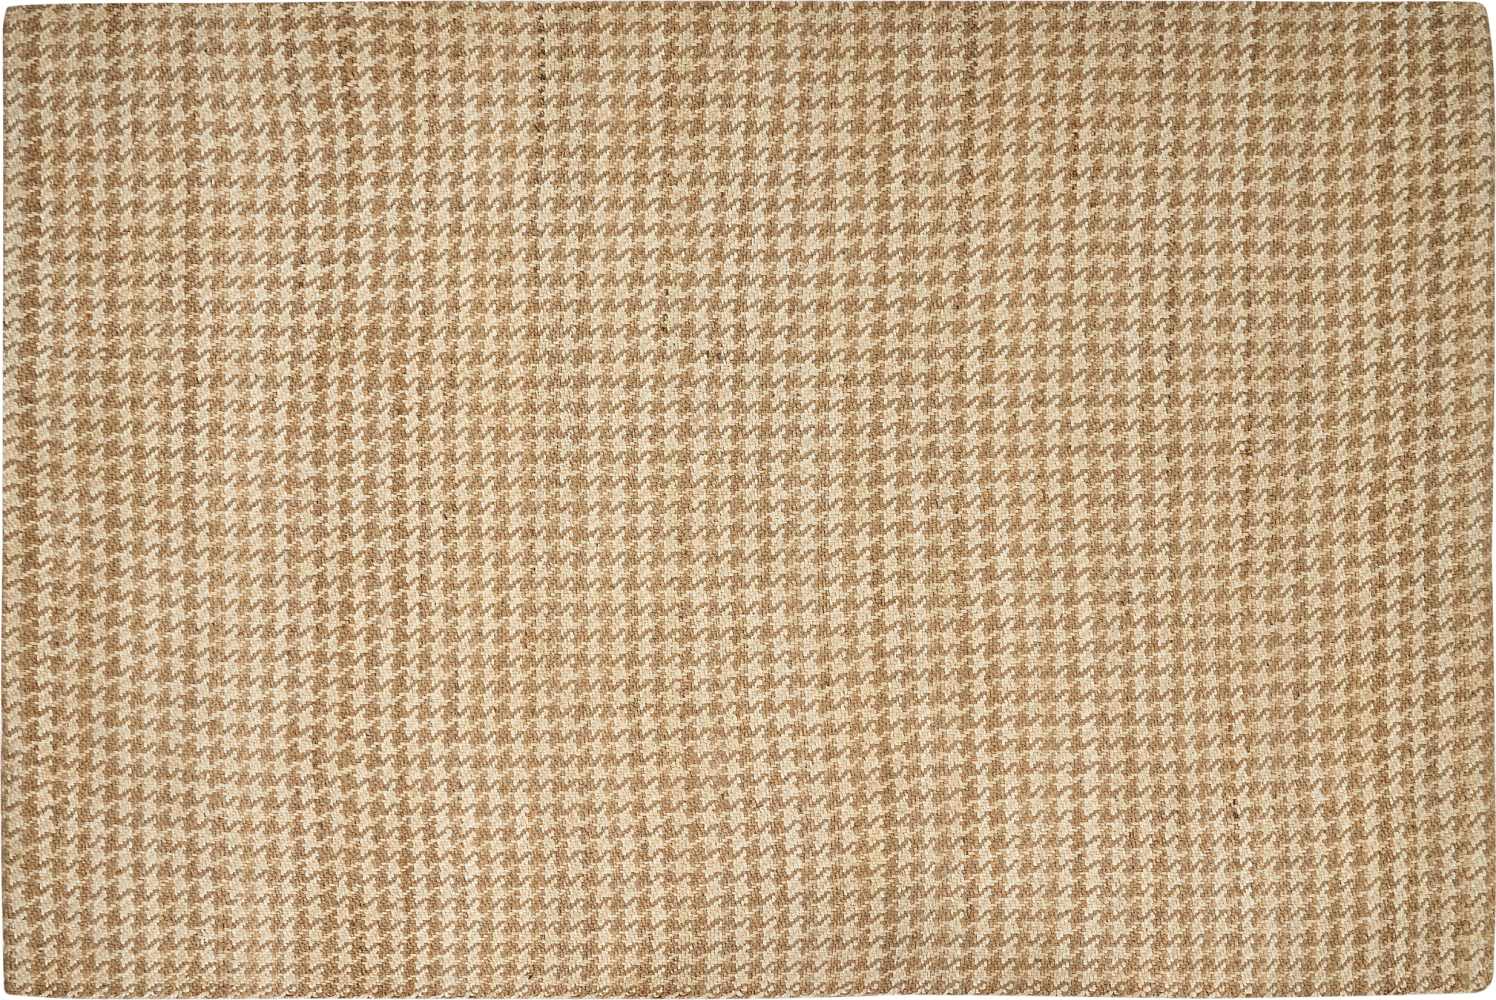 Teppich Jute beige 200 x 300 cm kariertes Muster Kurzflor ARAPTEPE Bild 1